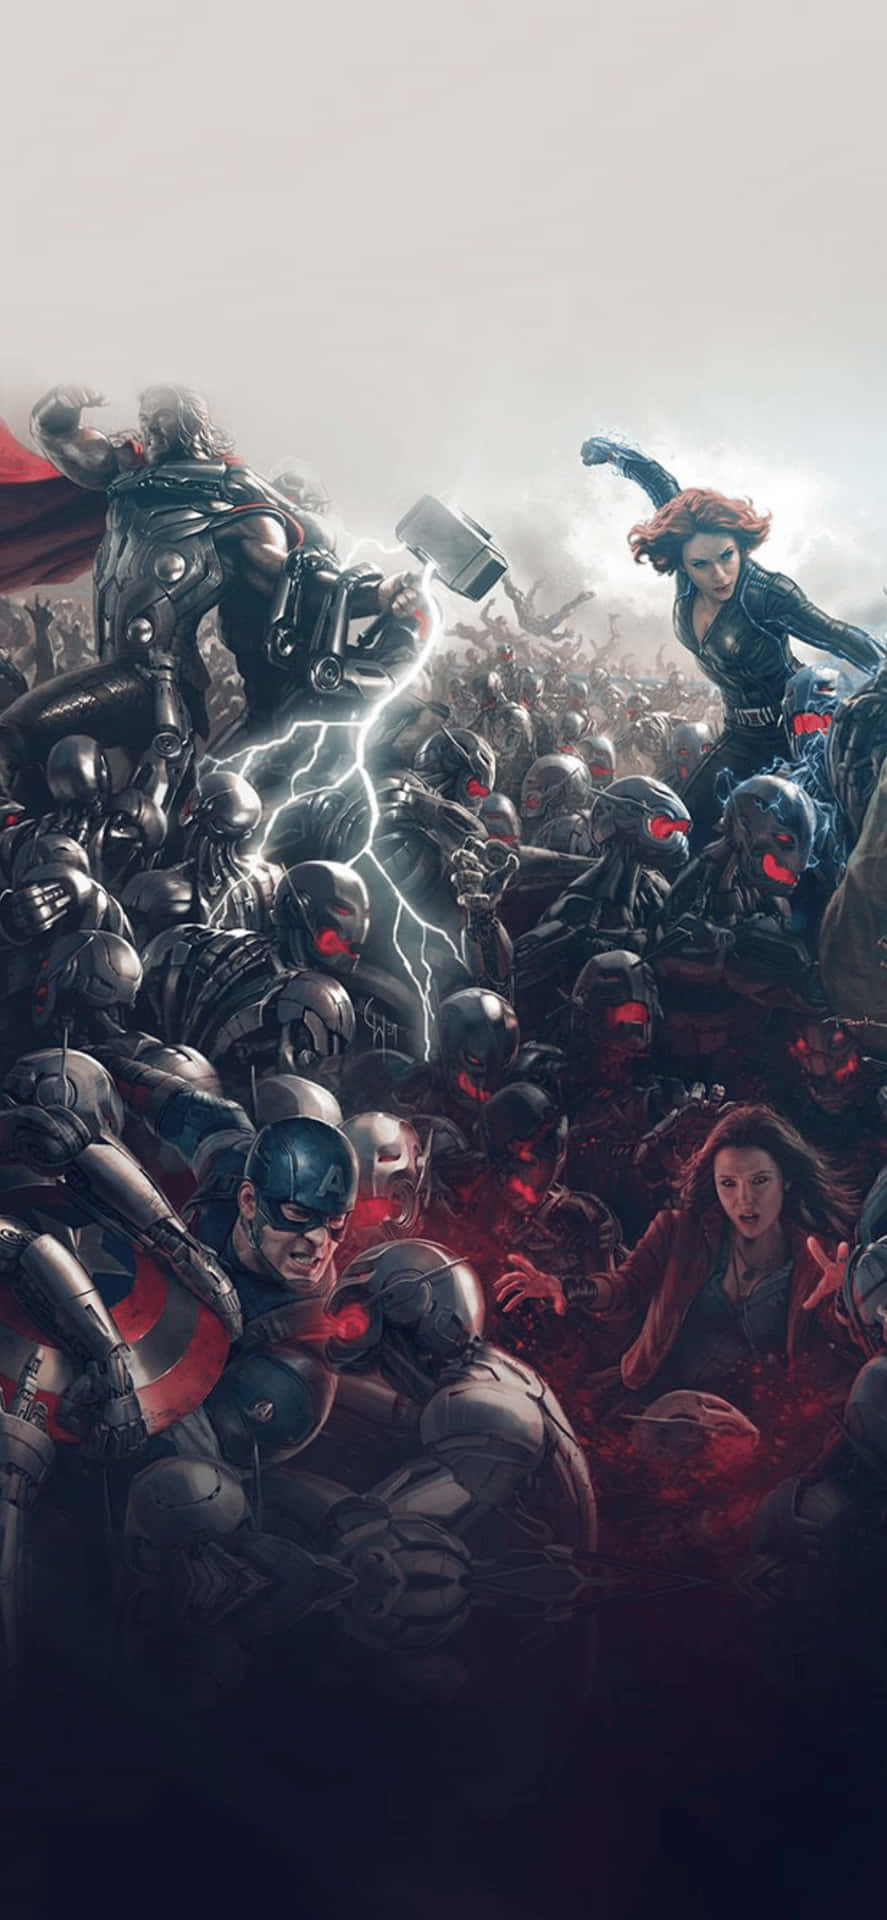 Iphonexs Max Marvel Avengers Age Of Ultron Bakgrundsbild.